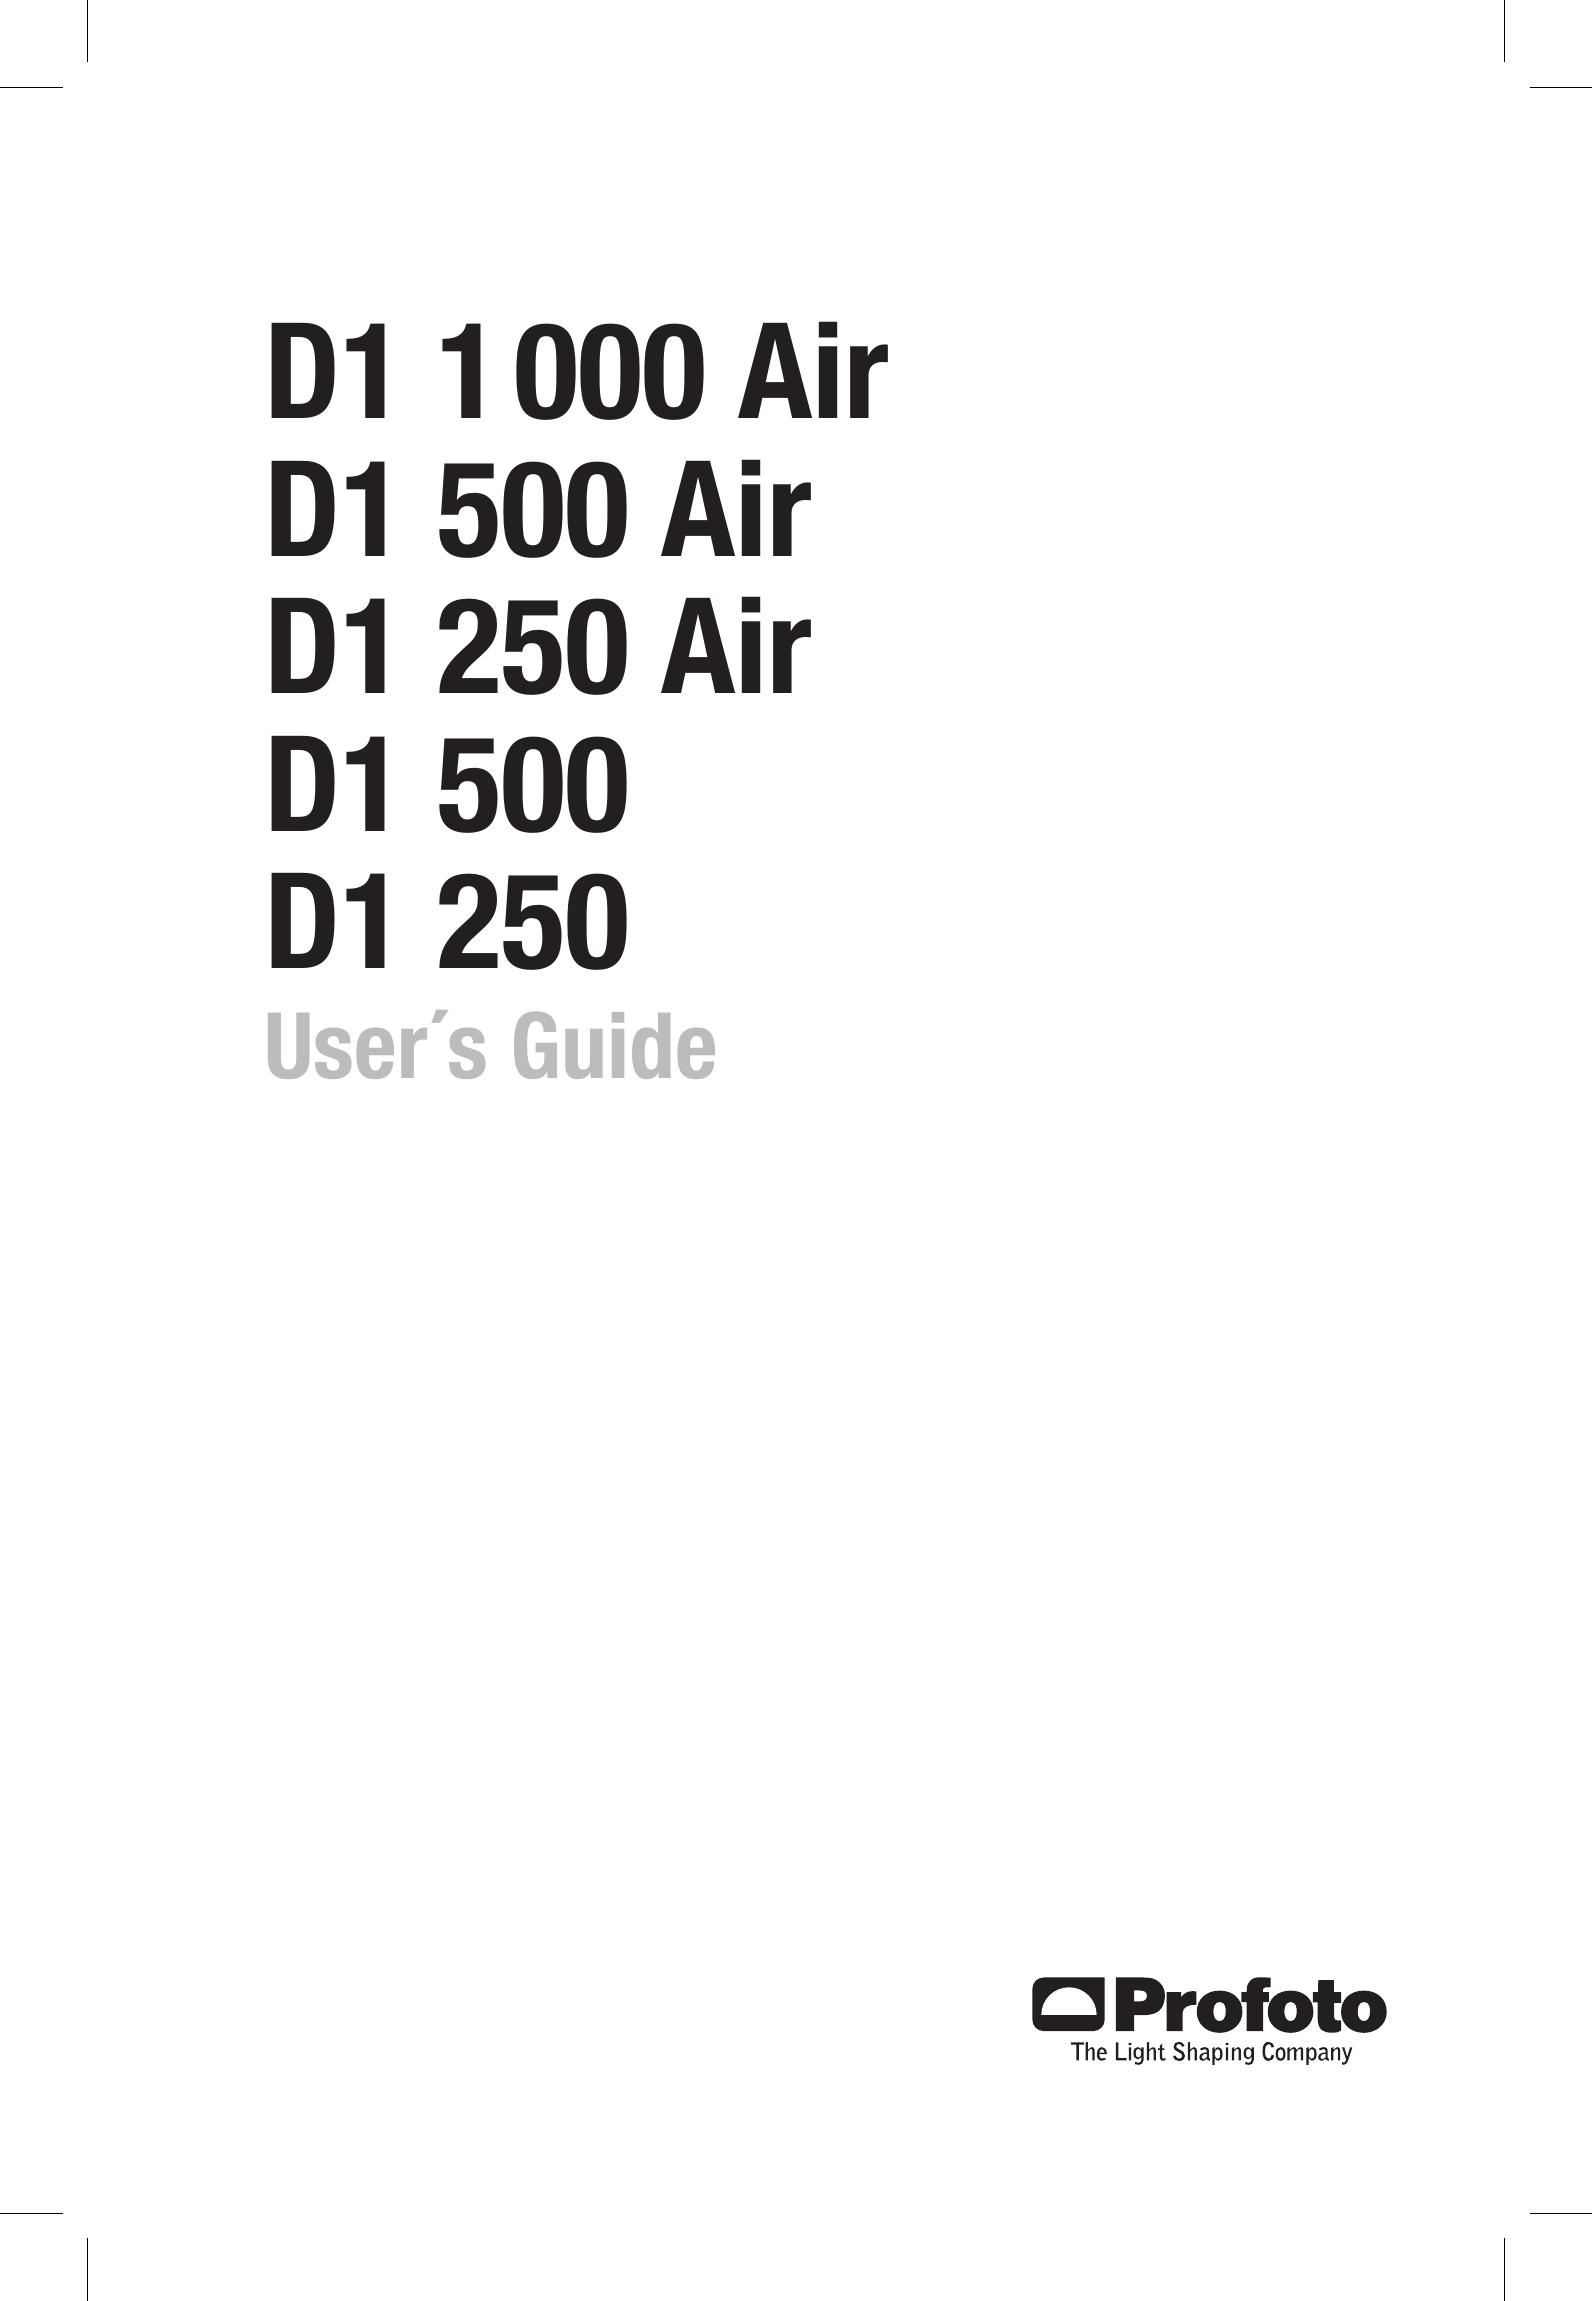 Profoto D1 250 AIR Camera Accessories User Manual